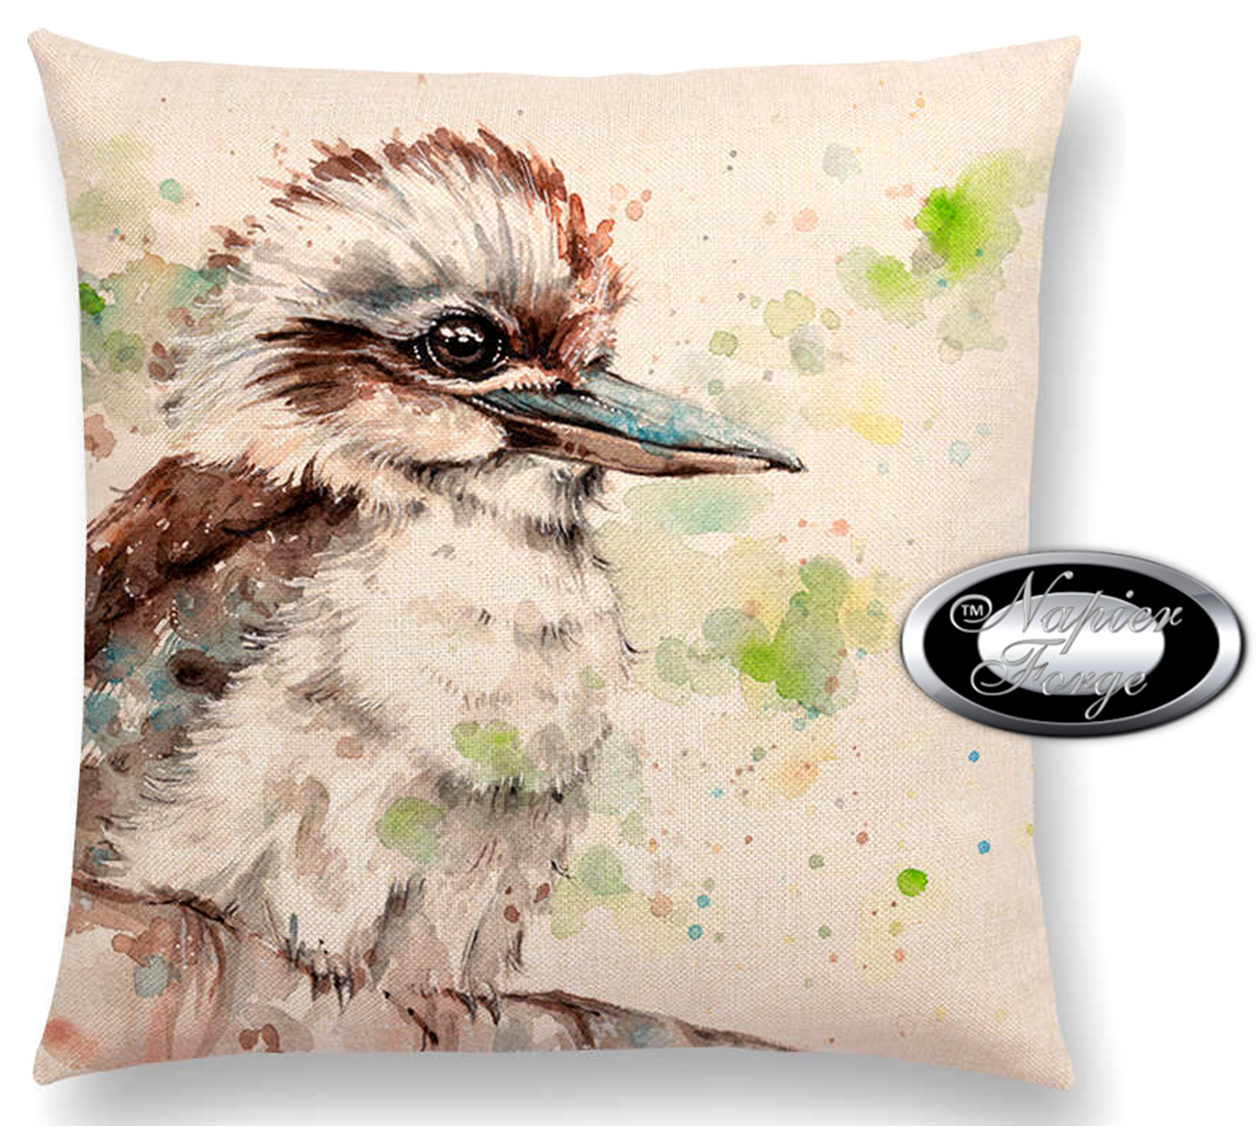 Farmhouse Cotton Linen Blend Cushion Cover 45cm x 45cm - Design Artists Kookaburra *Free Shipping